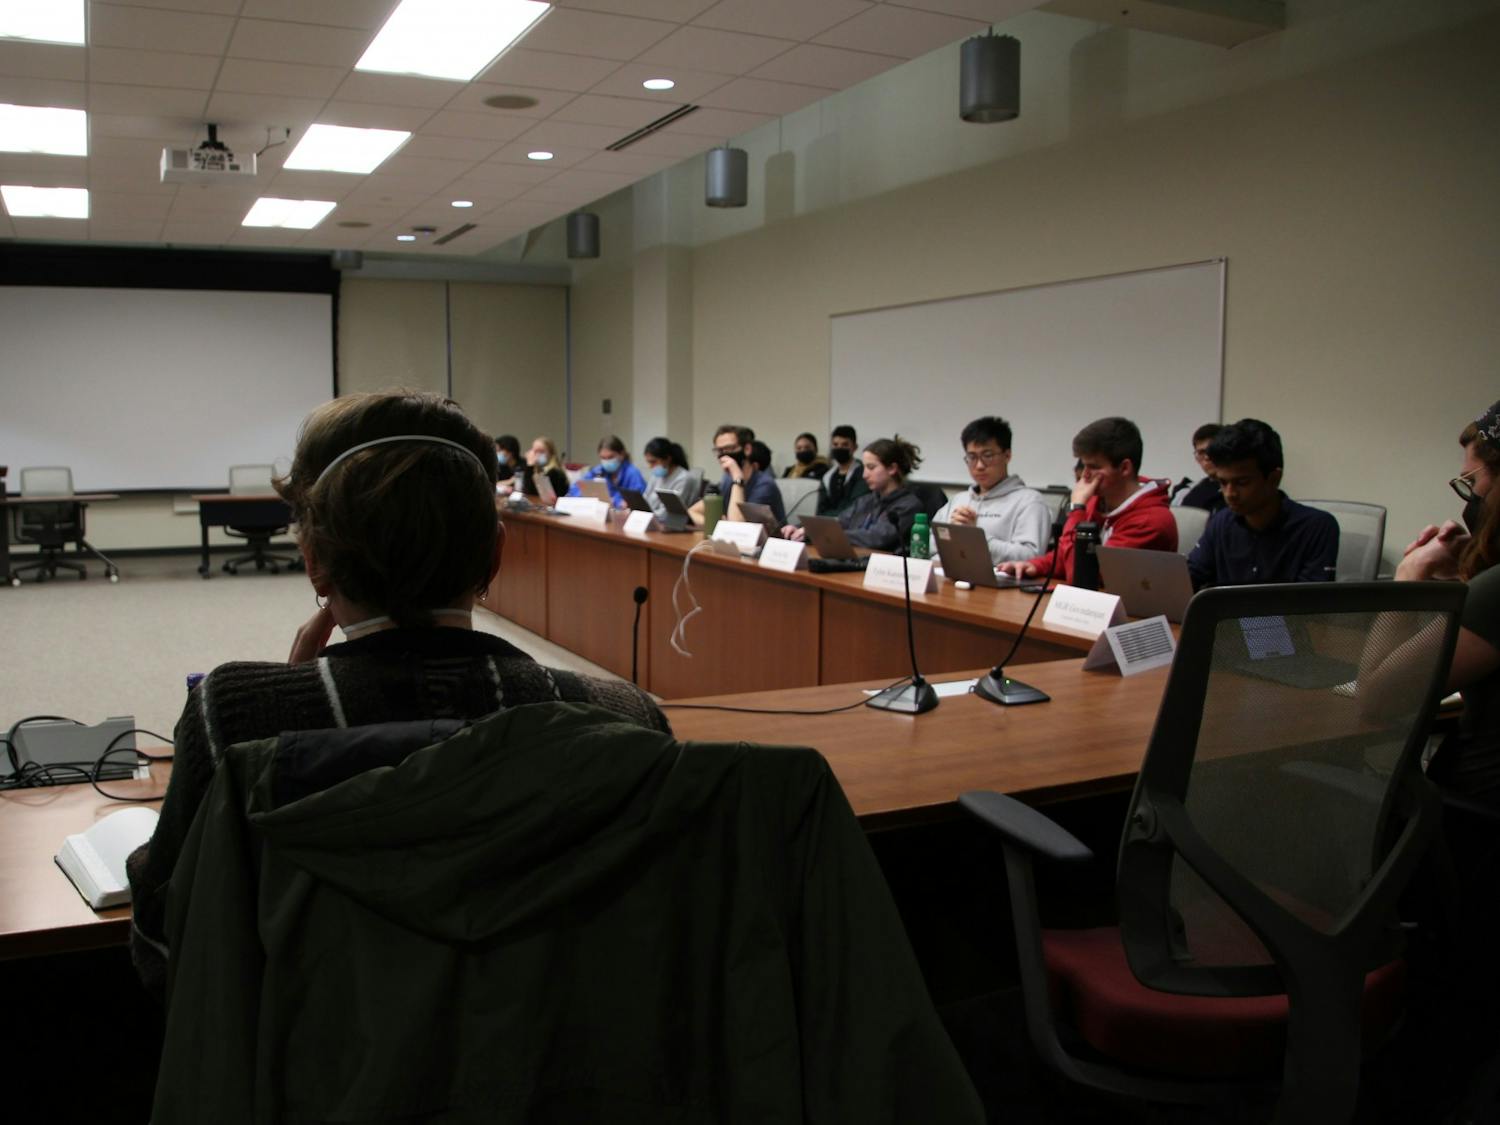 Drake White-Bergey ASM Associated Students of Madison Student Council Meeting SAC (1).JPG